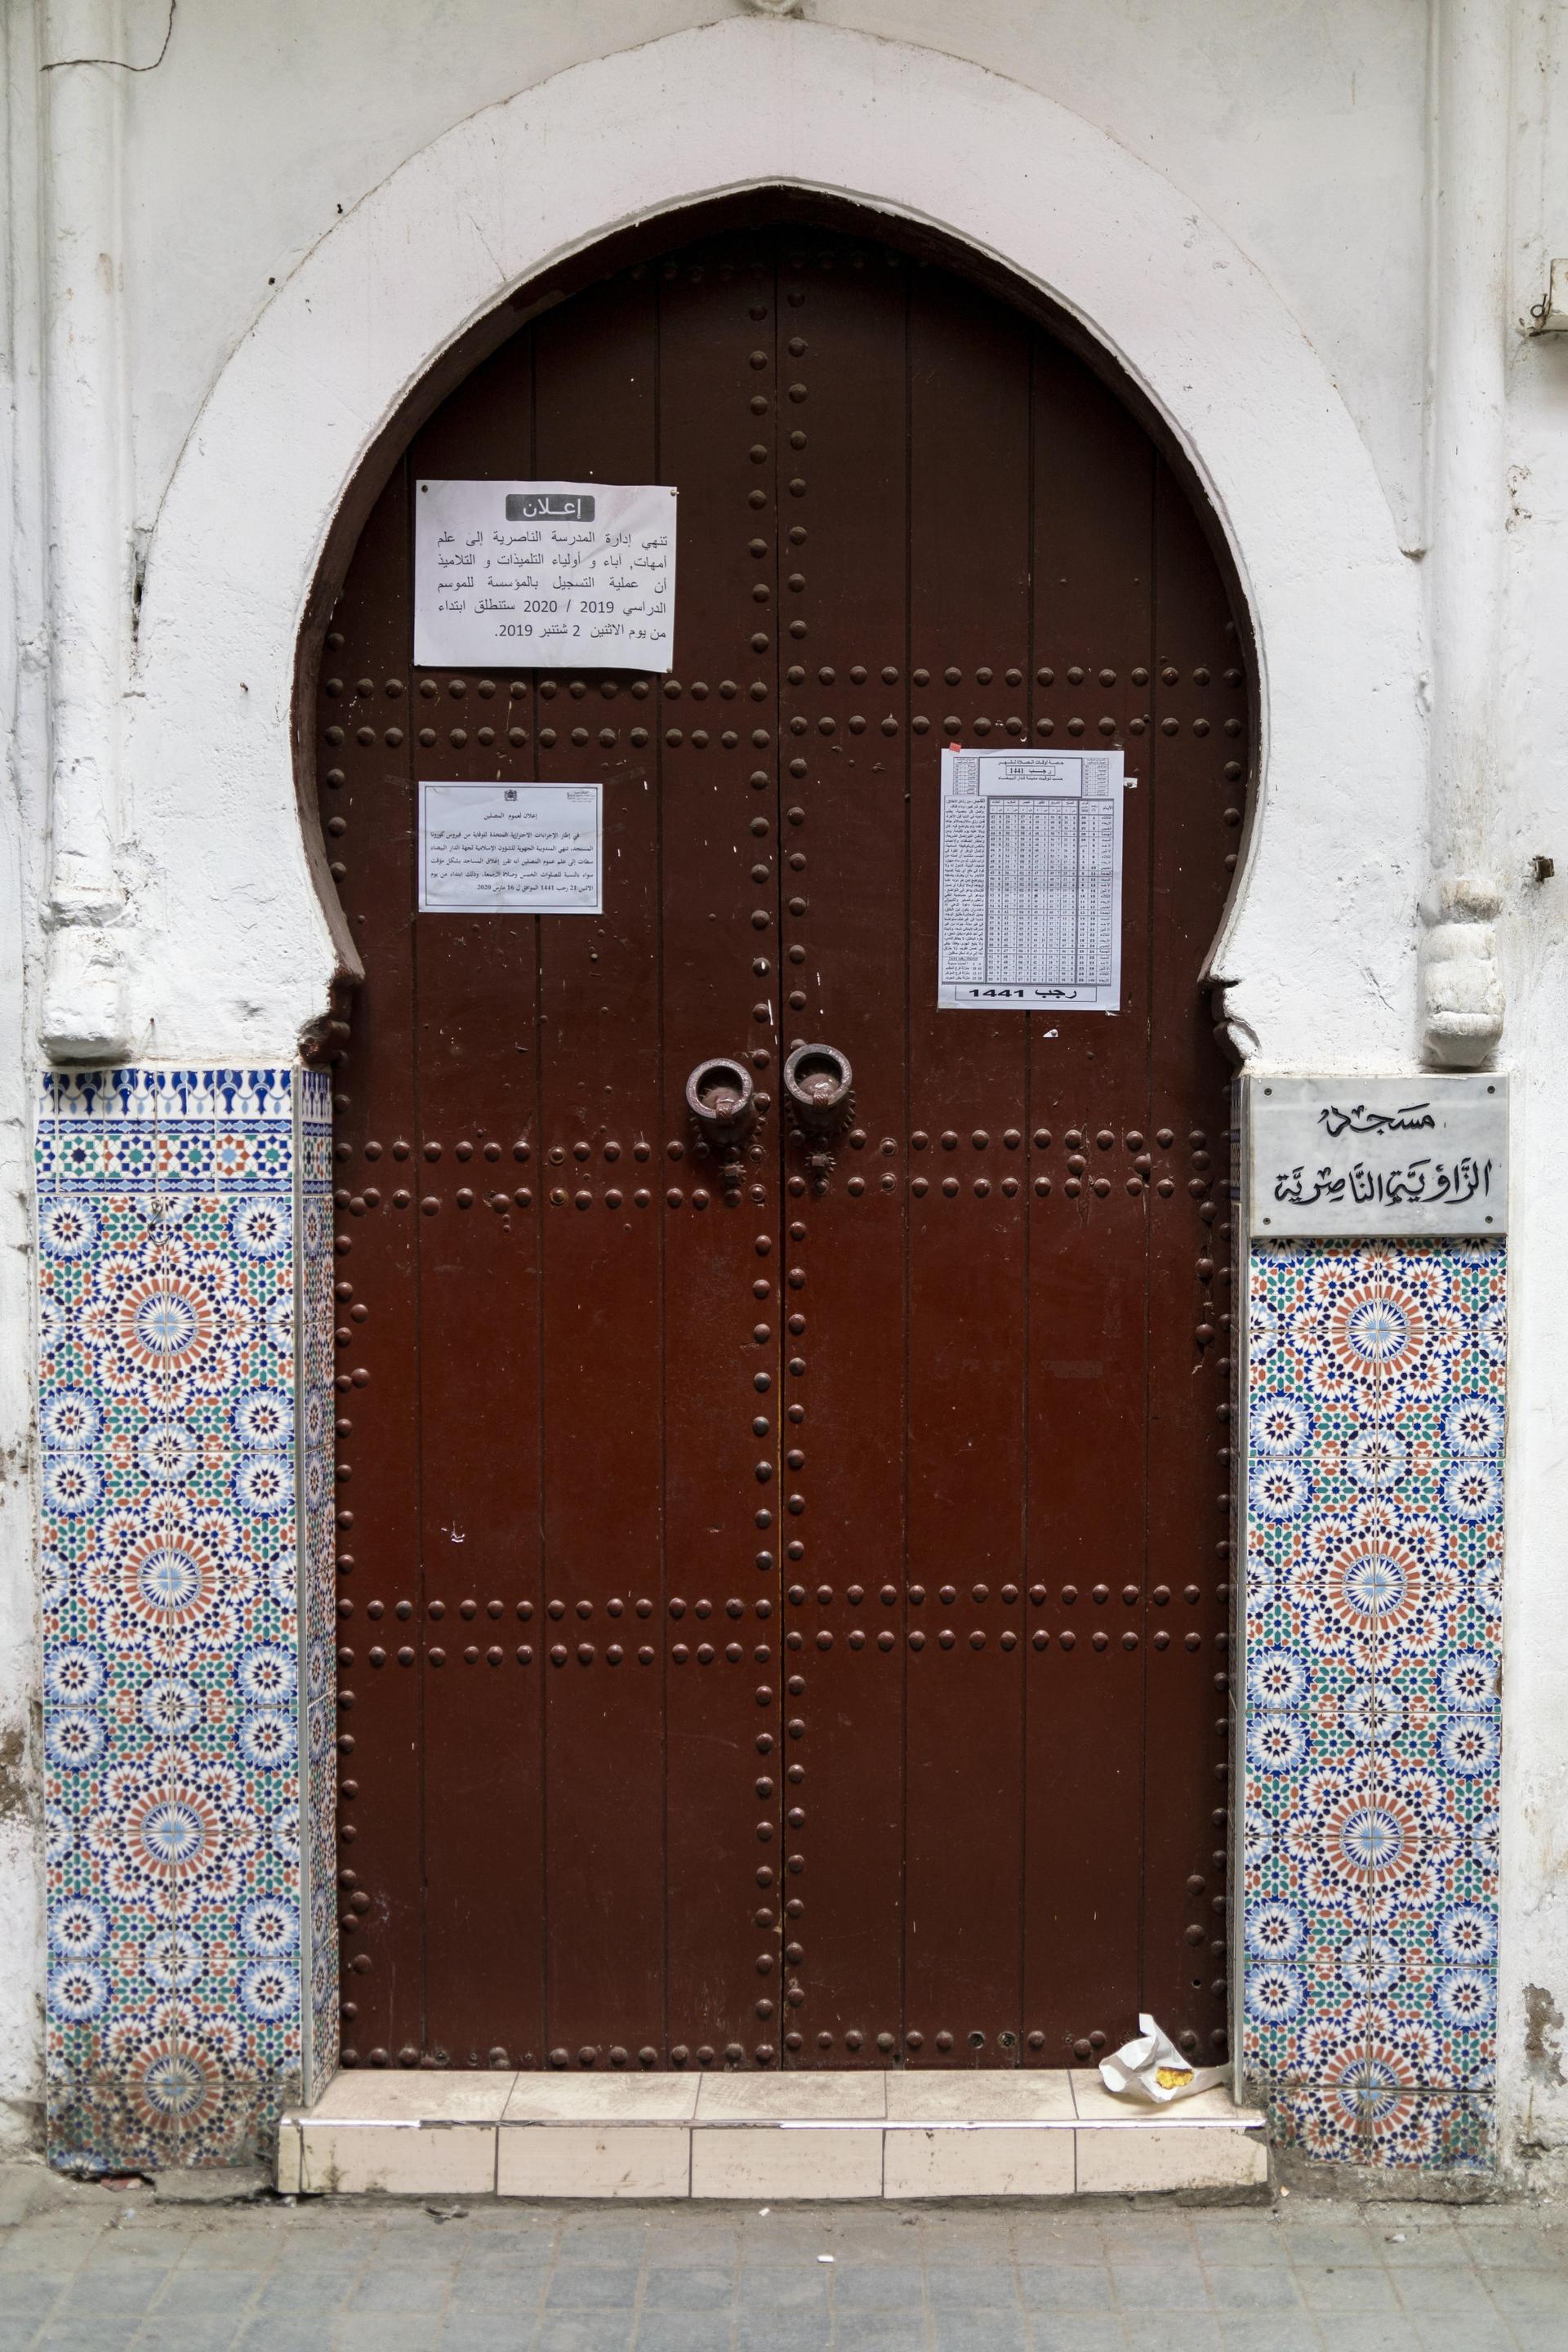 A closed mosque in the medina of Casablanca.